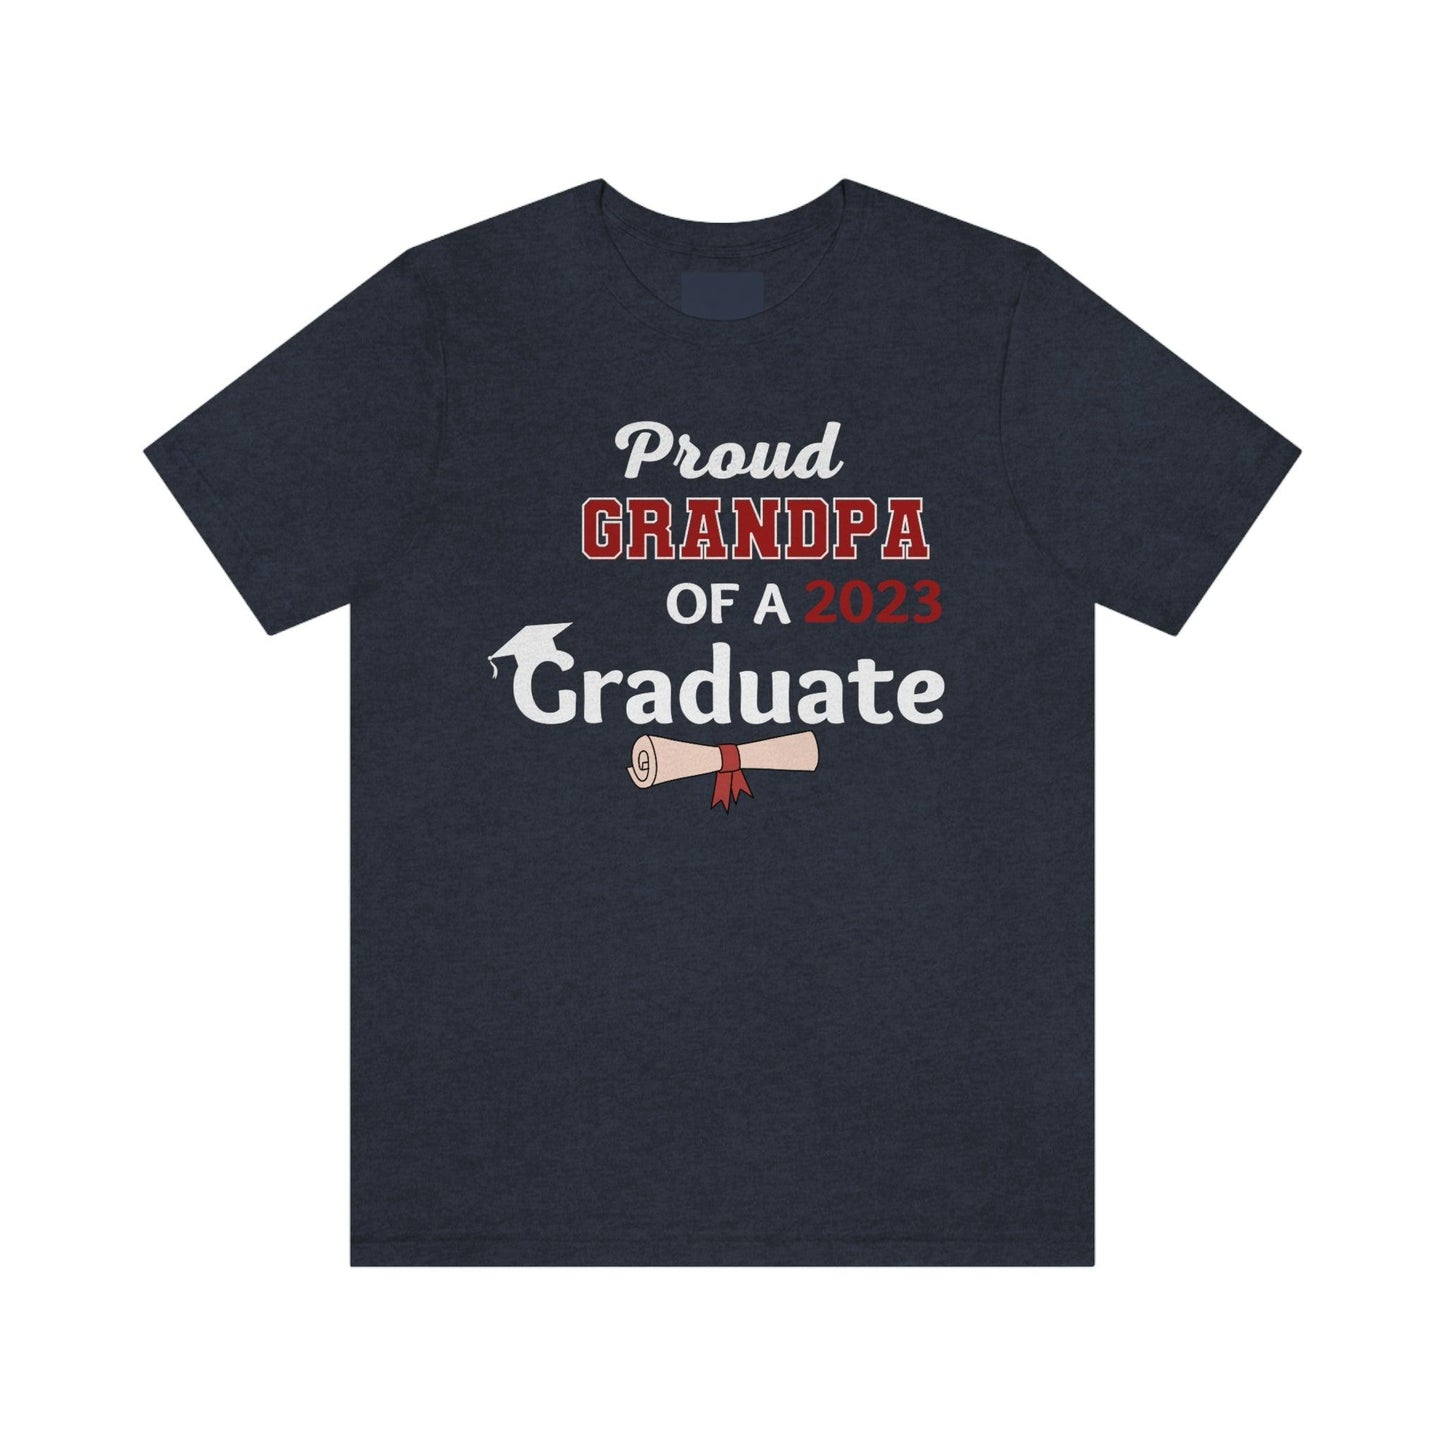 Proud Grandpa of a Graduate shirt - Graduation shirt - Graduation gift